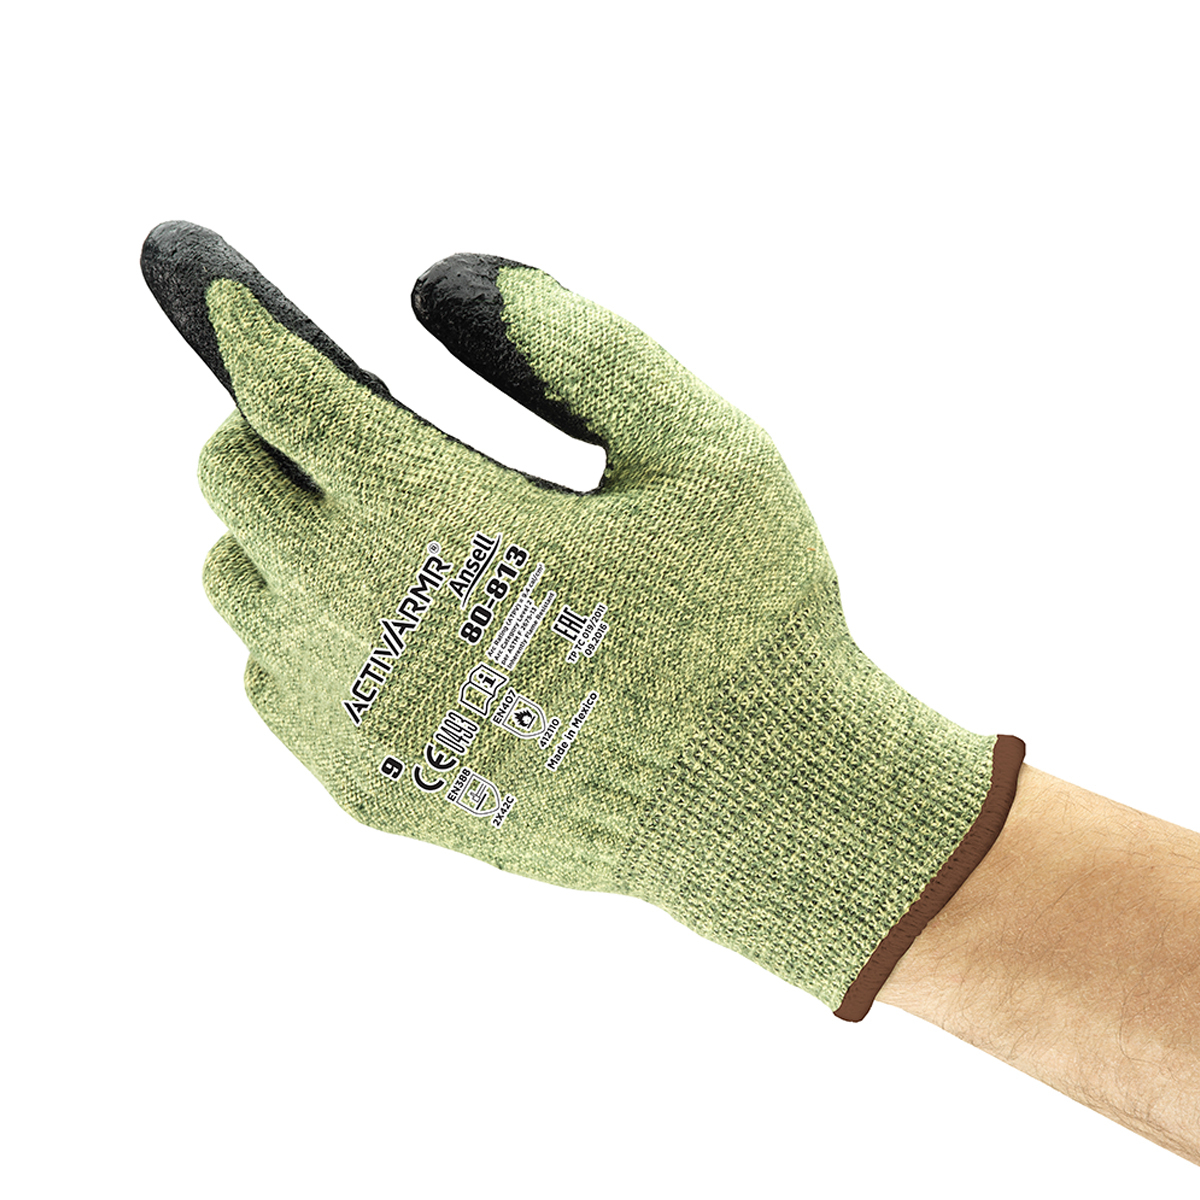 Ansell Cut Resistant Gloves,Green/Black,Sz 9,PR 80-813